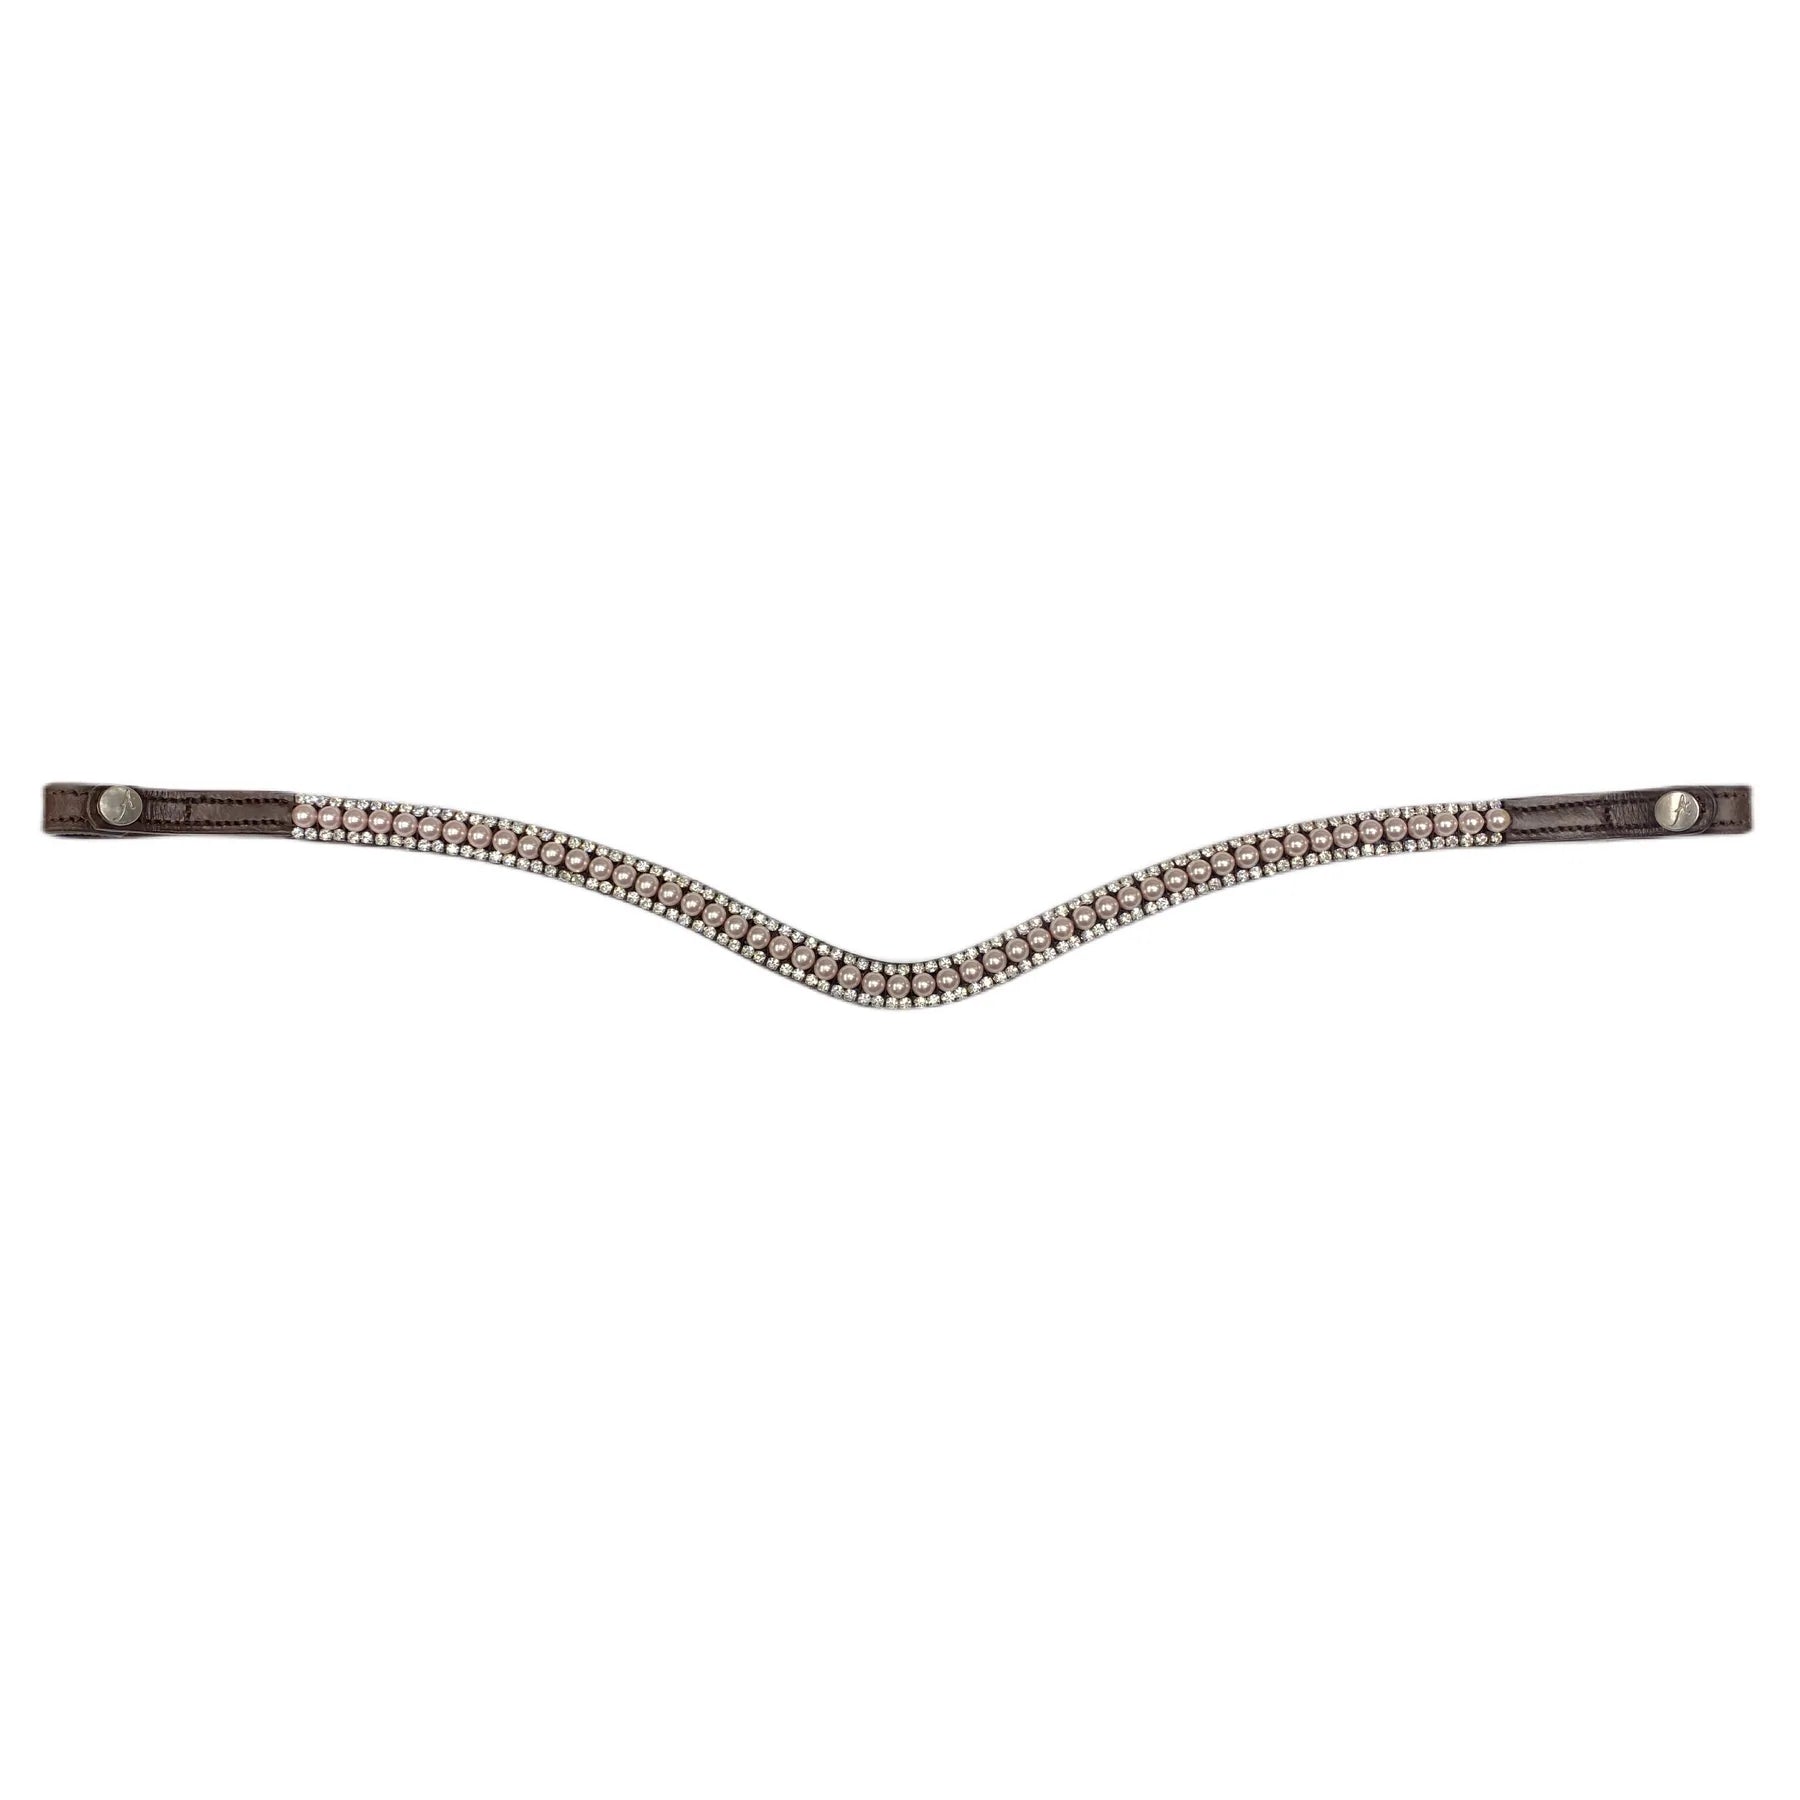 Artemis Equine Pearl Rose Snap-On Browband, Brown Leather